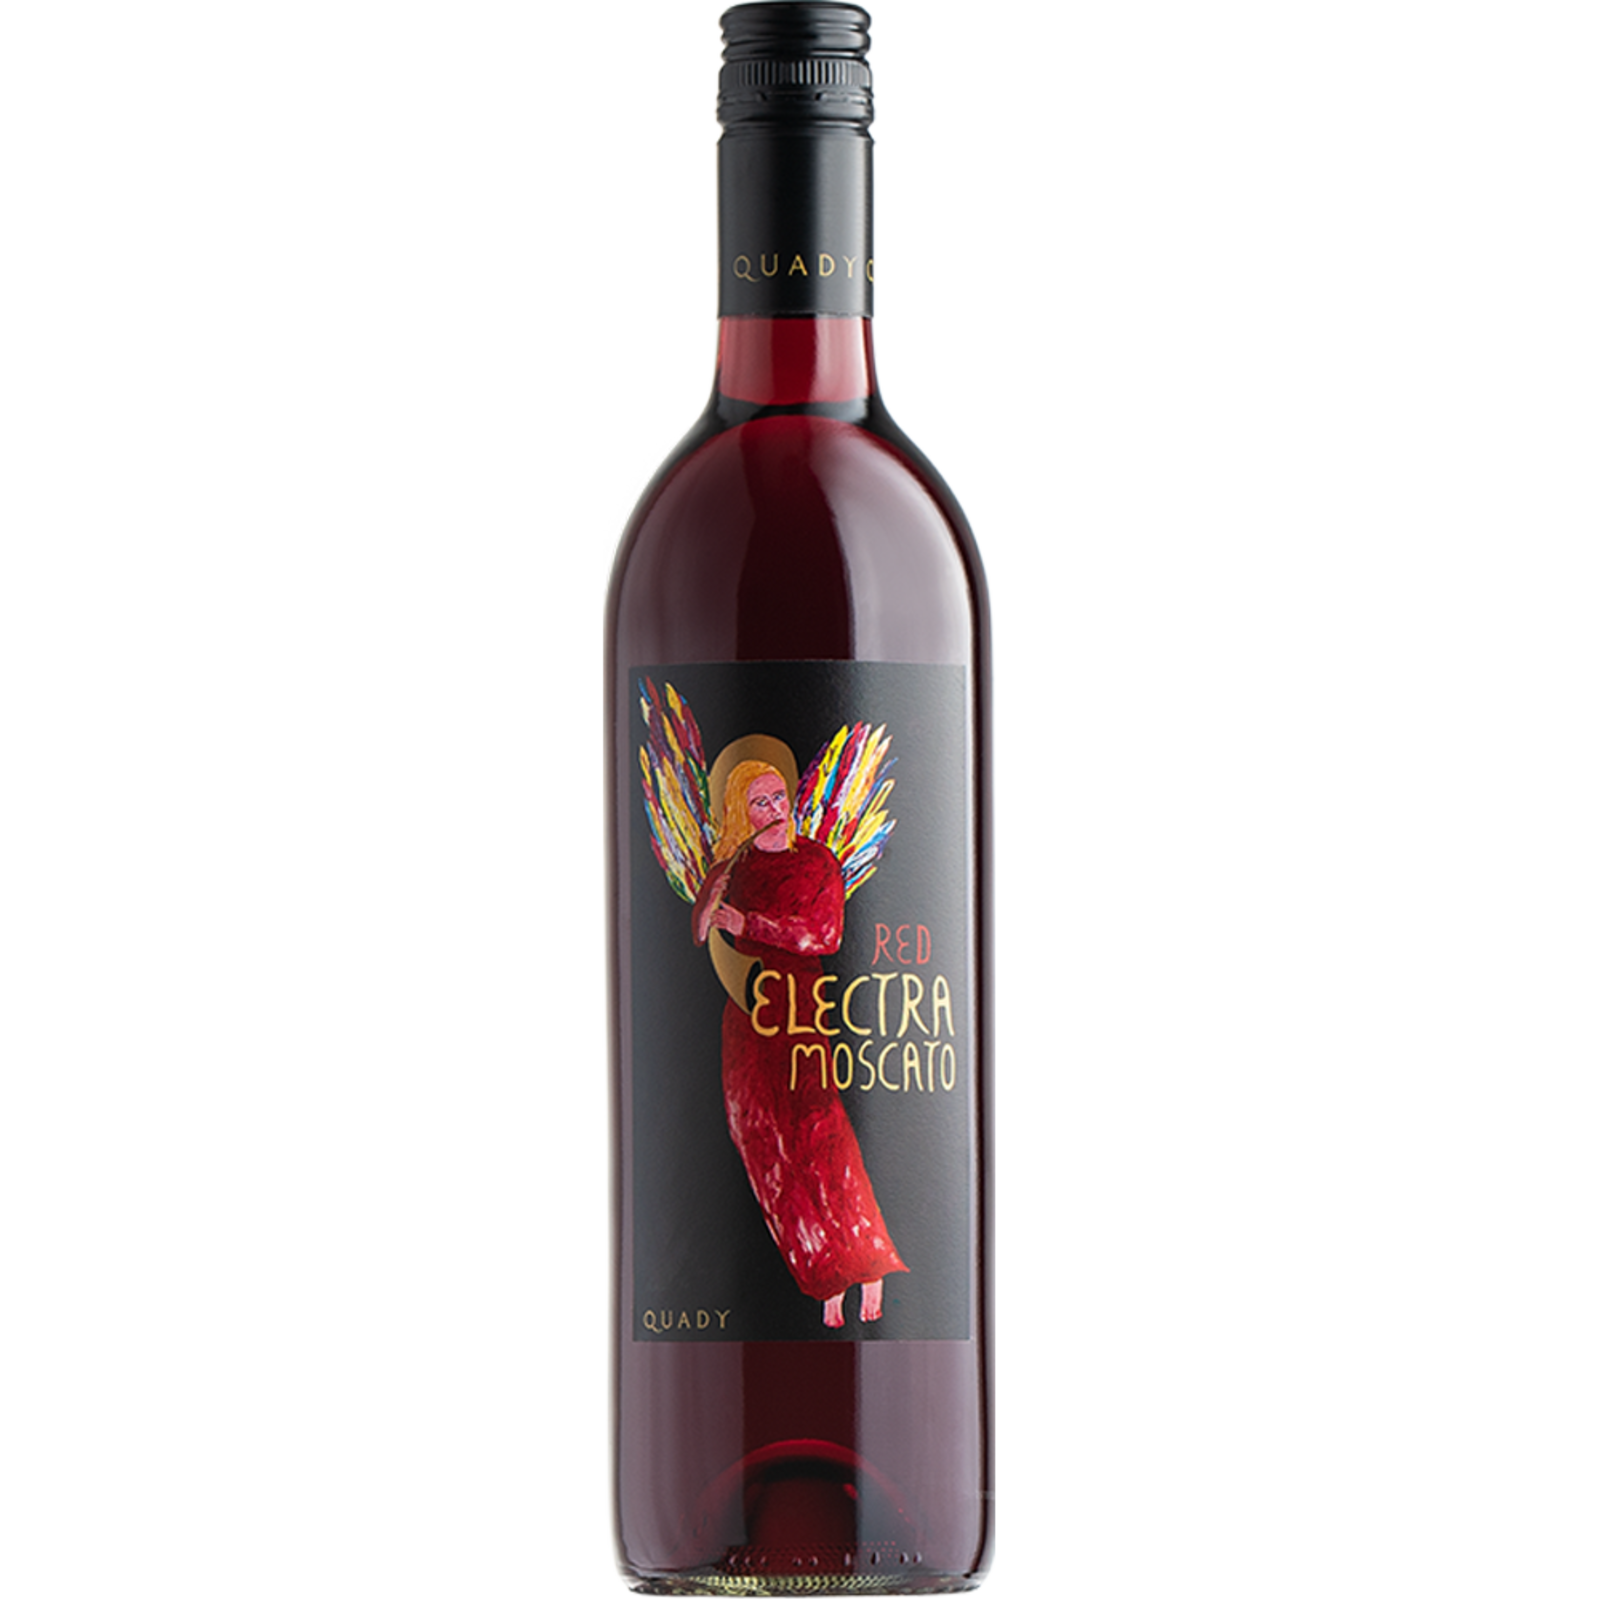 Quady Winery Quady Winery Red Electra 2020